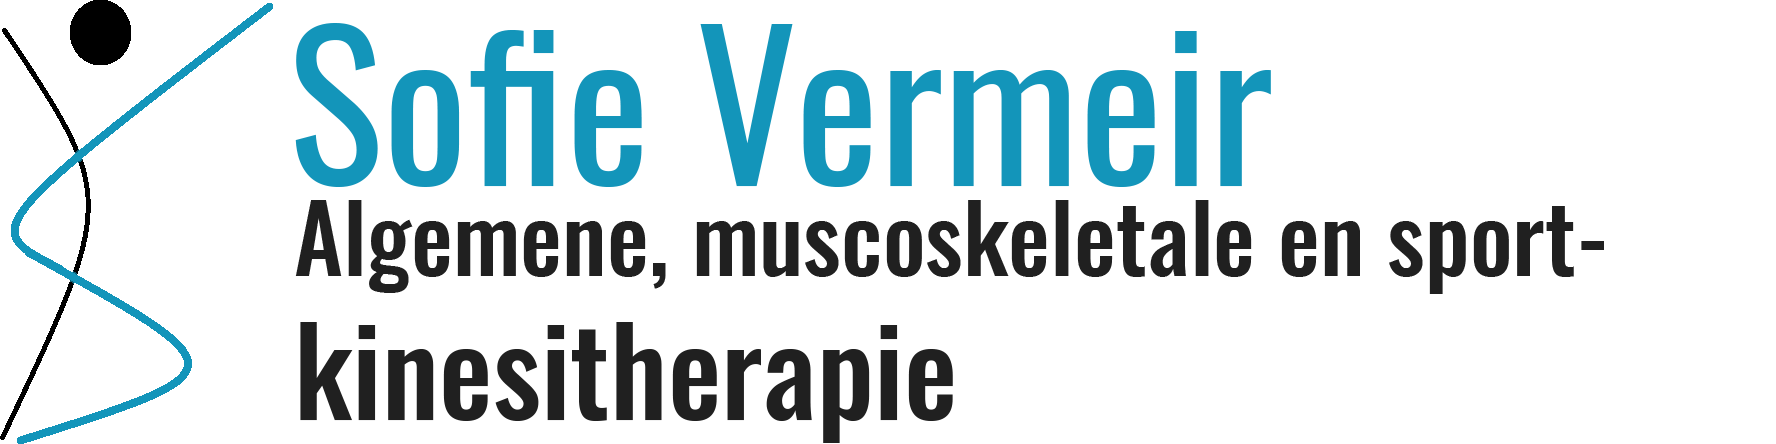 Sofie Vermeir - Algemene, muscoskeletale & sport-kinesitherapie